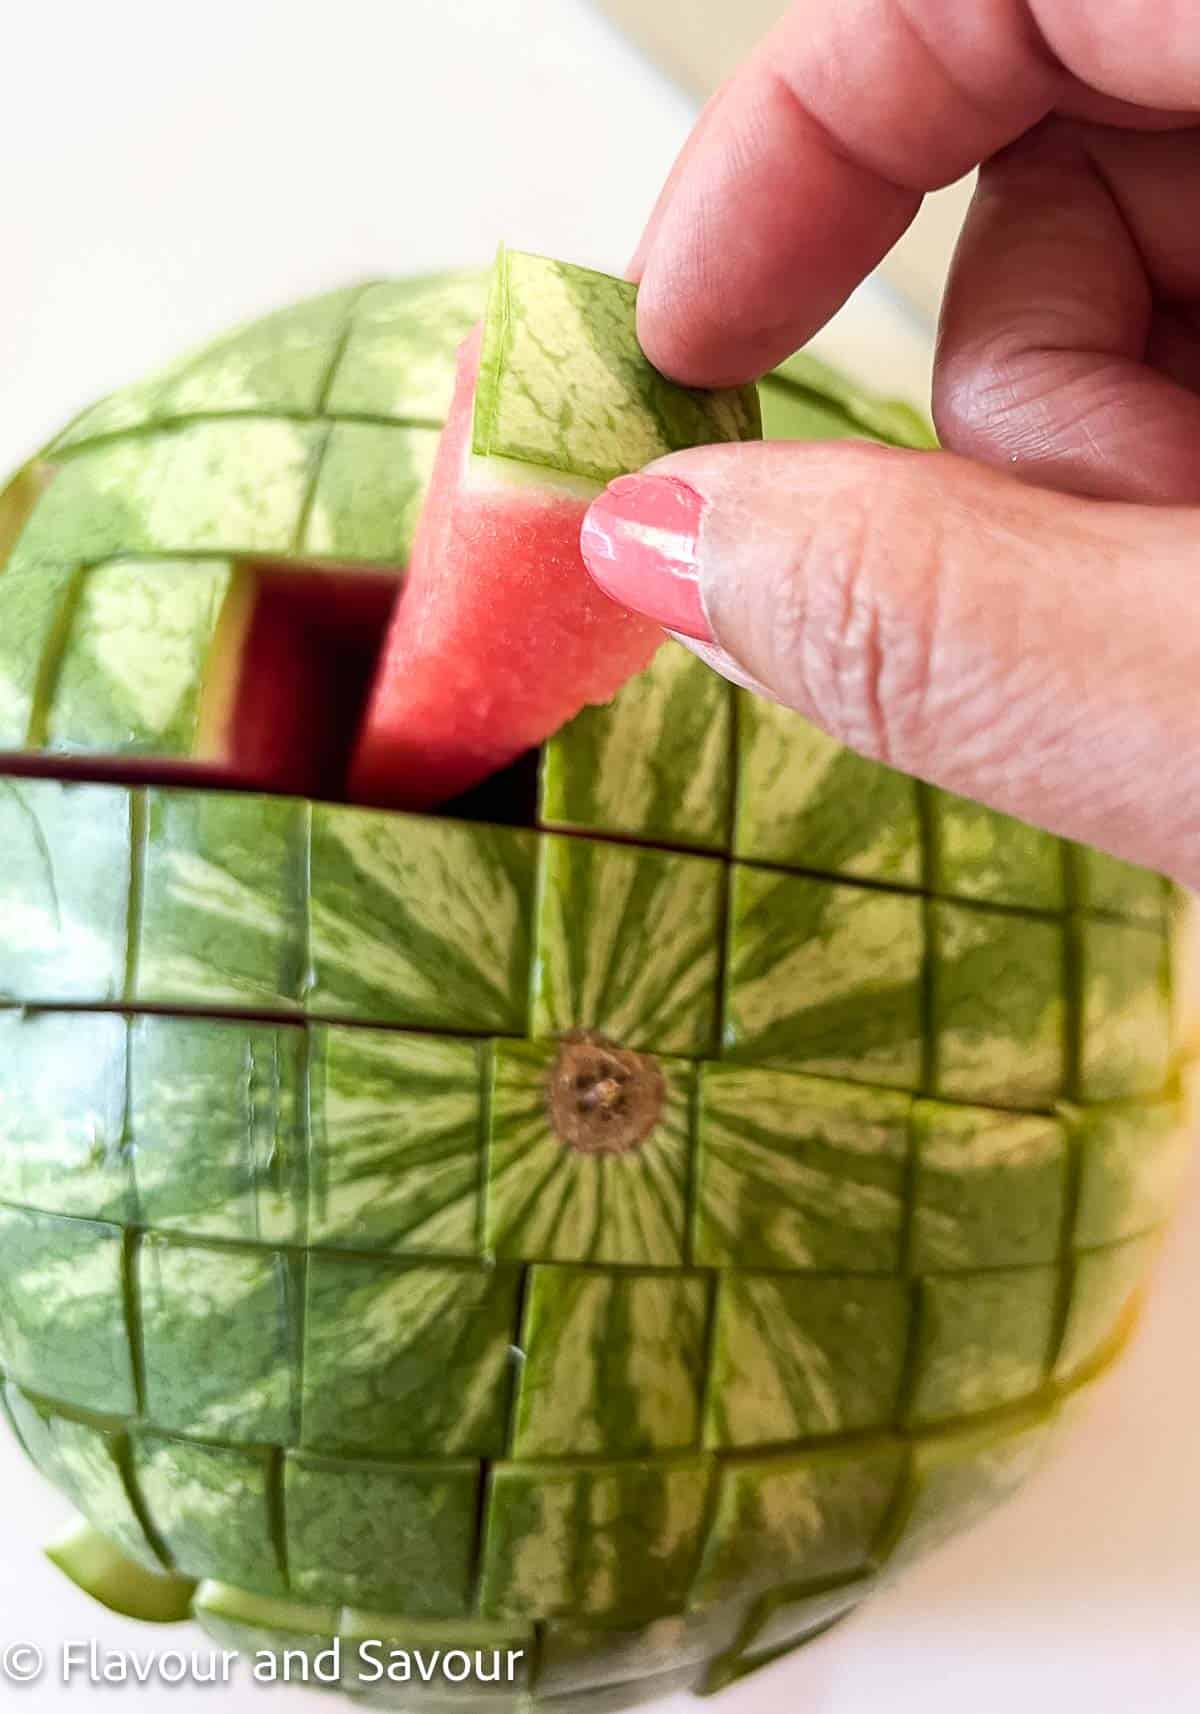 A hand pulling a watermelon spear from a cut watermelon.